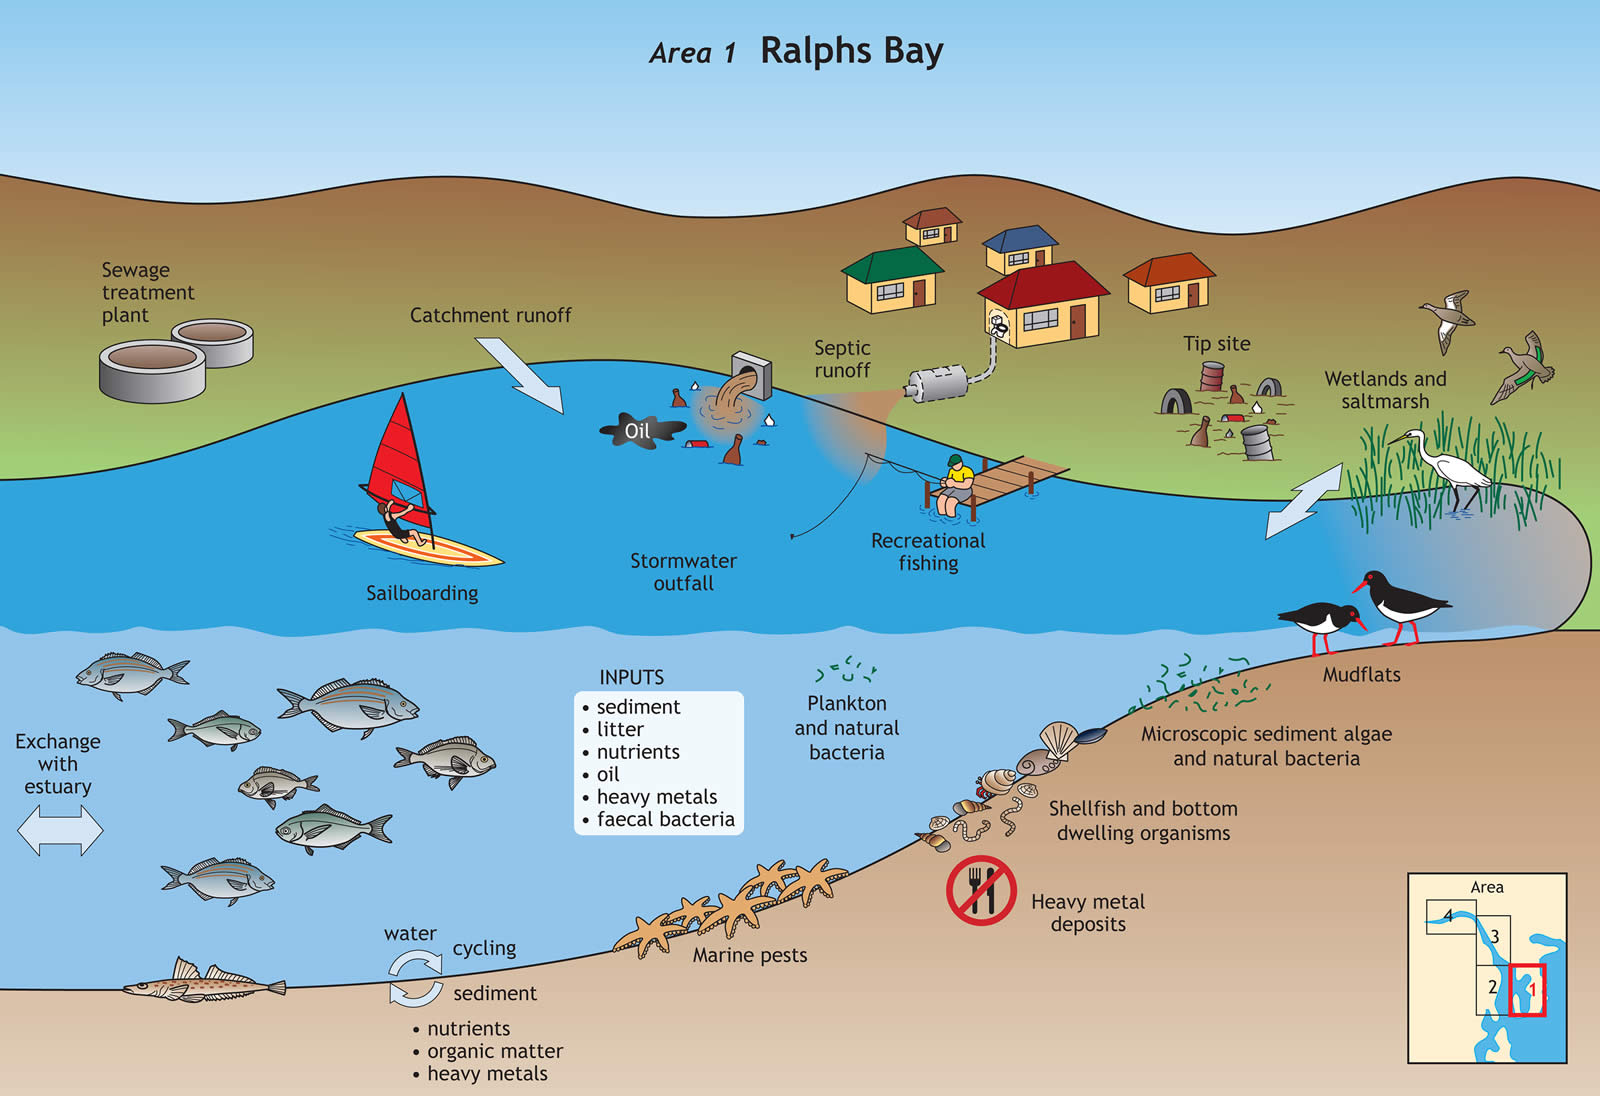 Ralphs Bay. Diagrams produced by Land Tasmania © State of Tasmania.